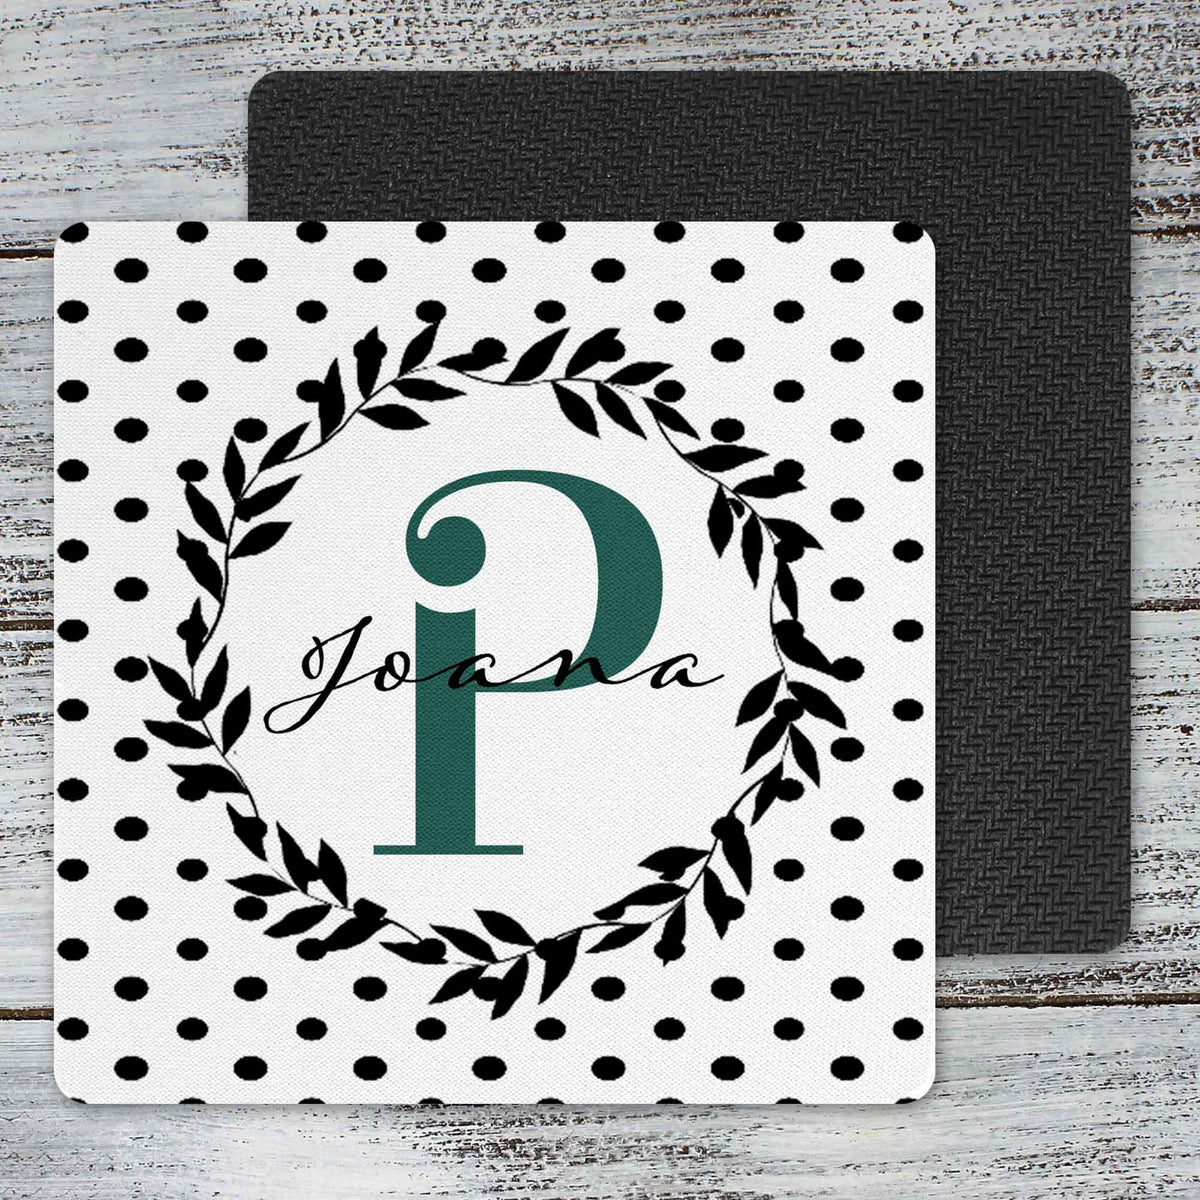 Personalized Coasters | Custom Stone Coaster Set | Polka Dot Wreath | Set of 4